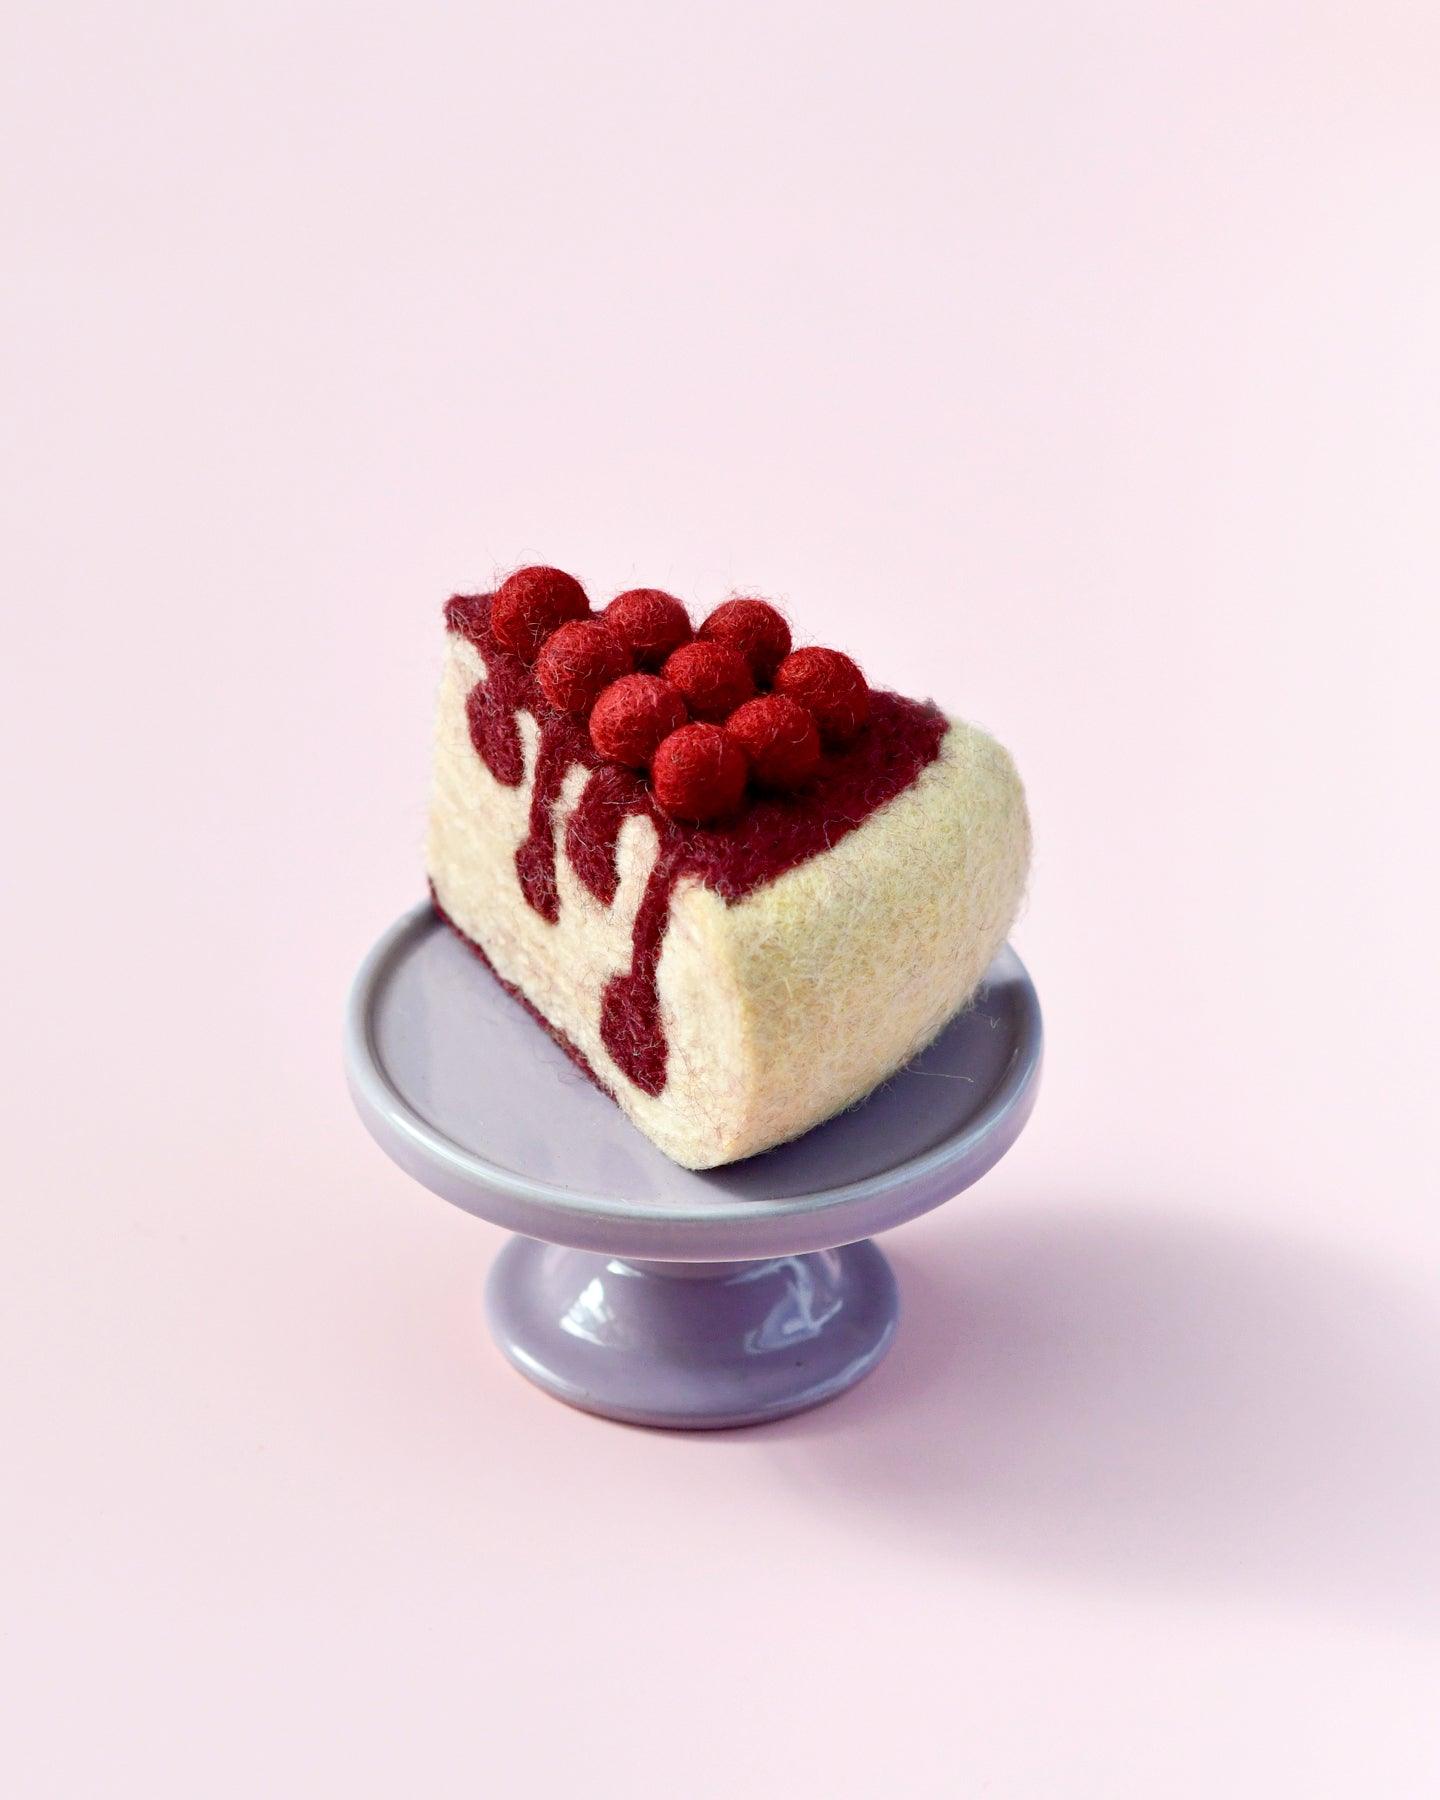 Felt Boysenberry Cheesecake Slice - Tara Treasures